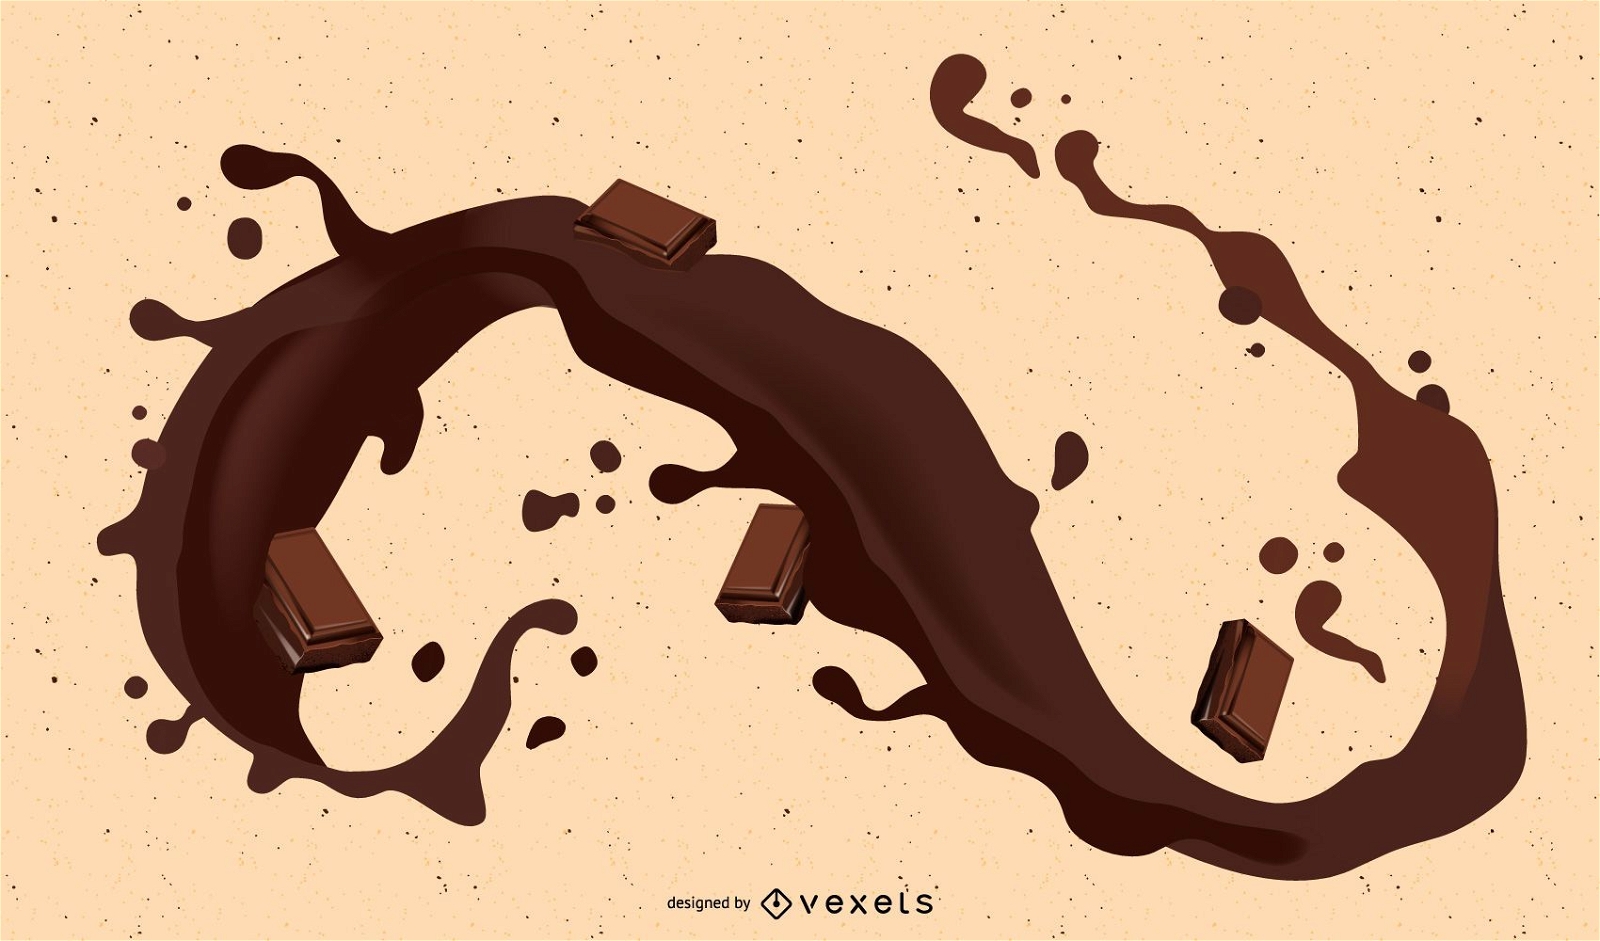 Melted chocolate illustration design